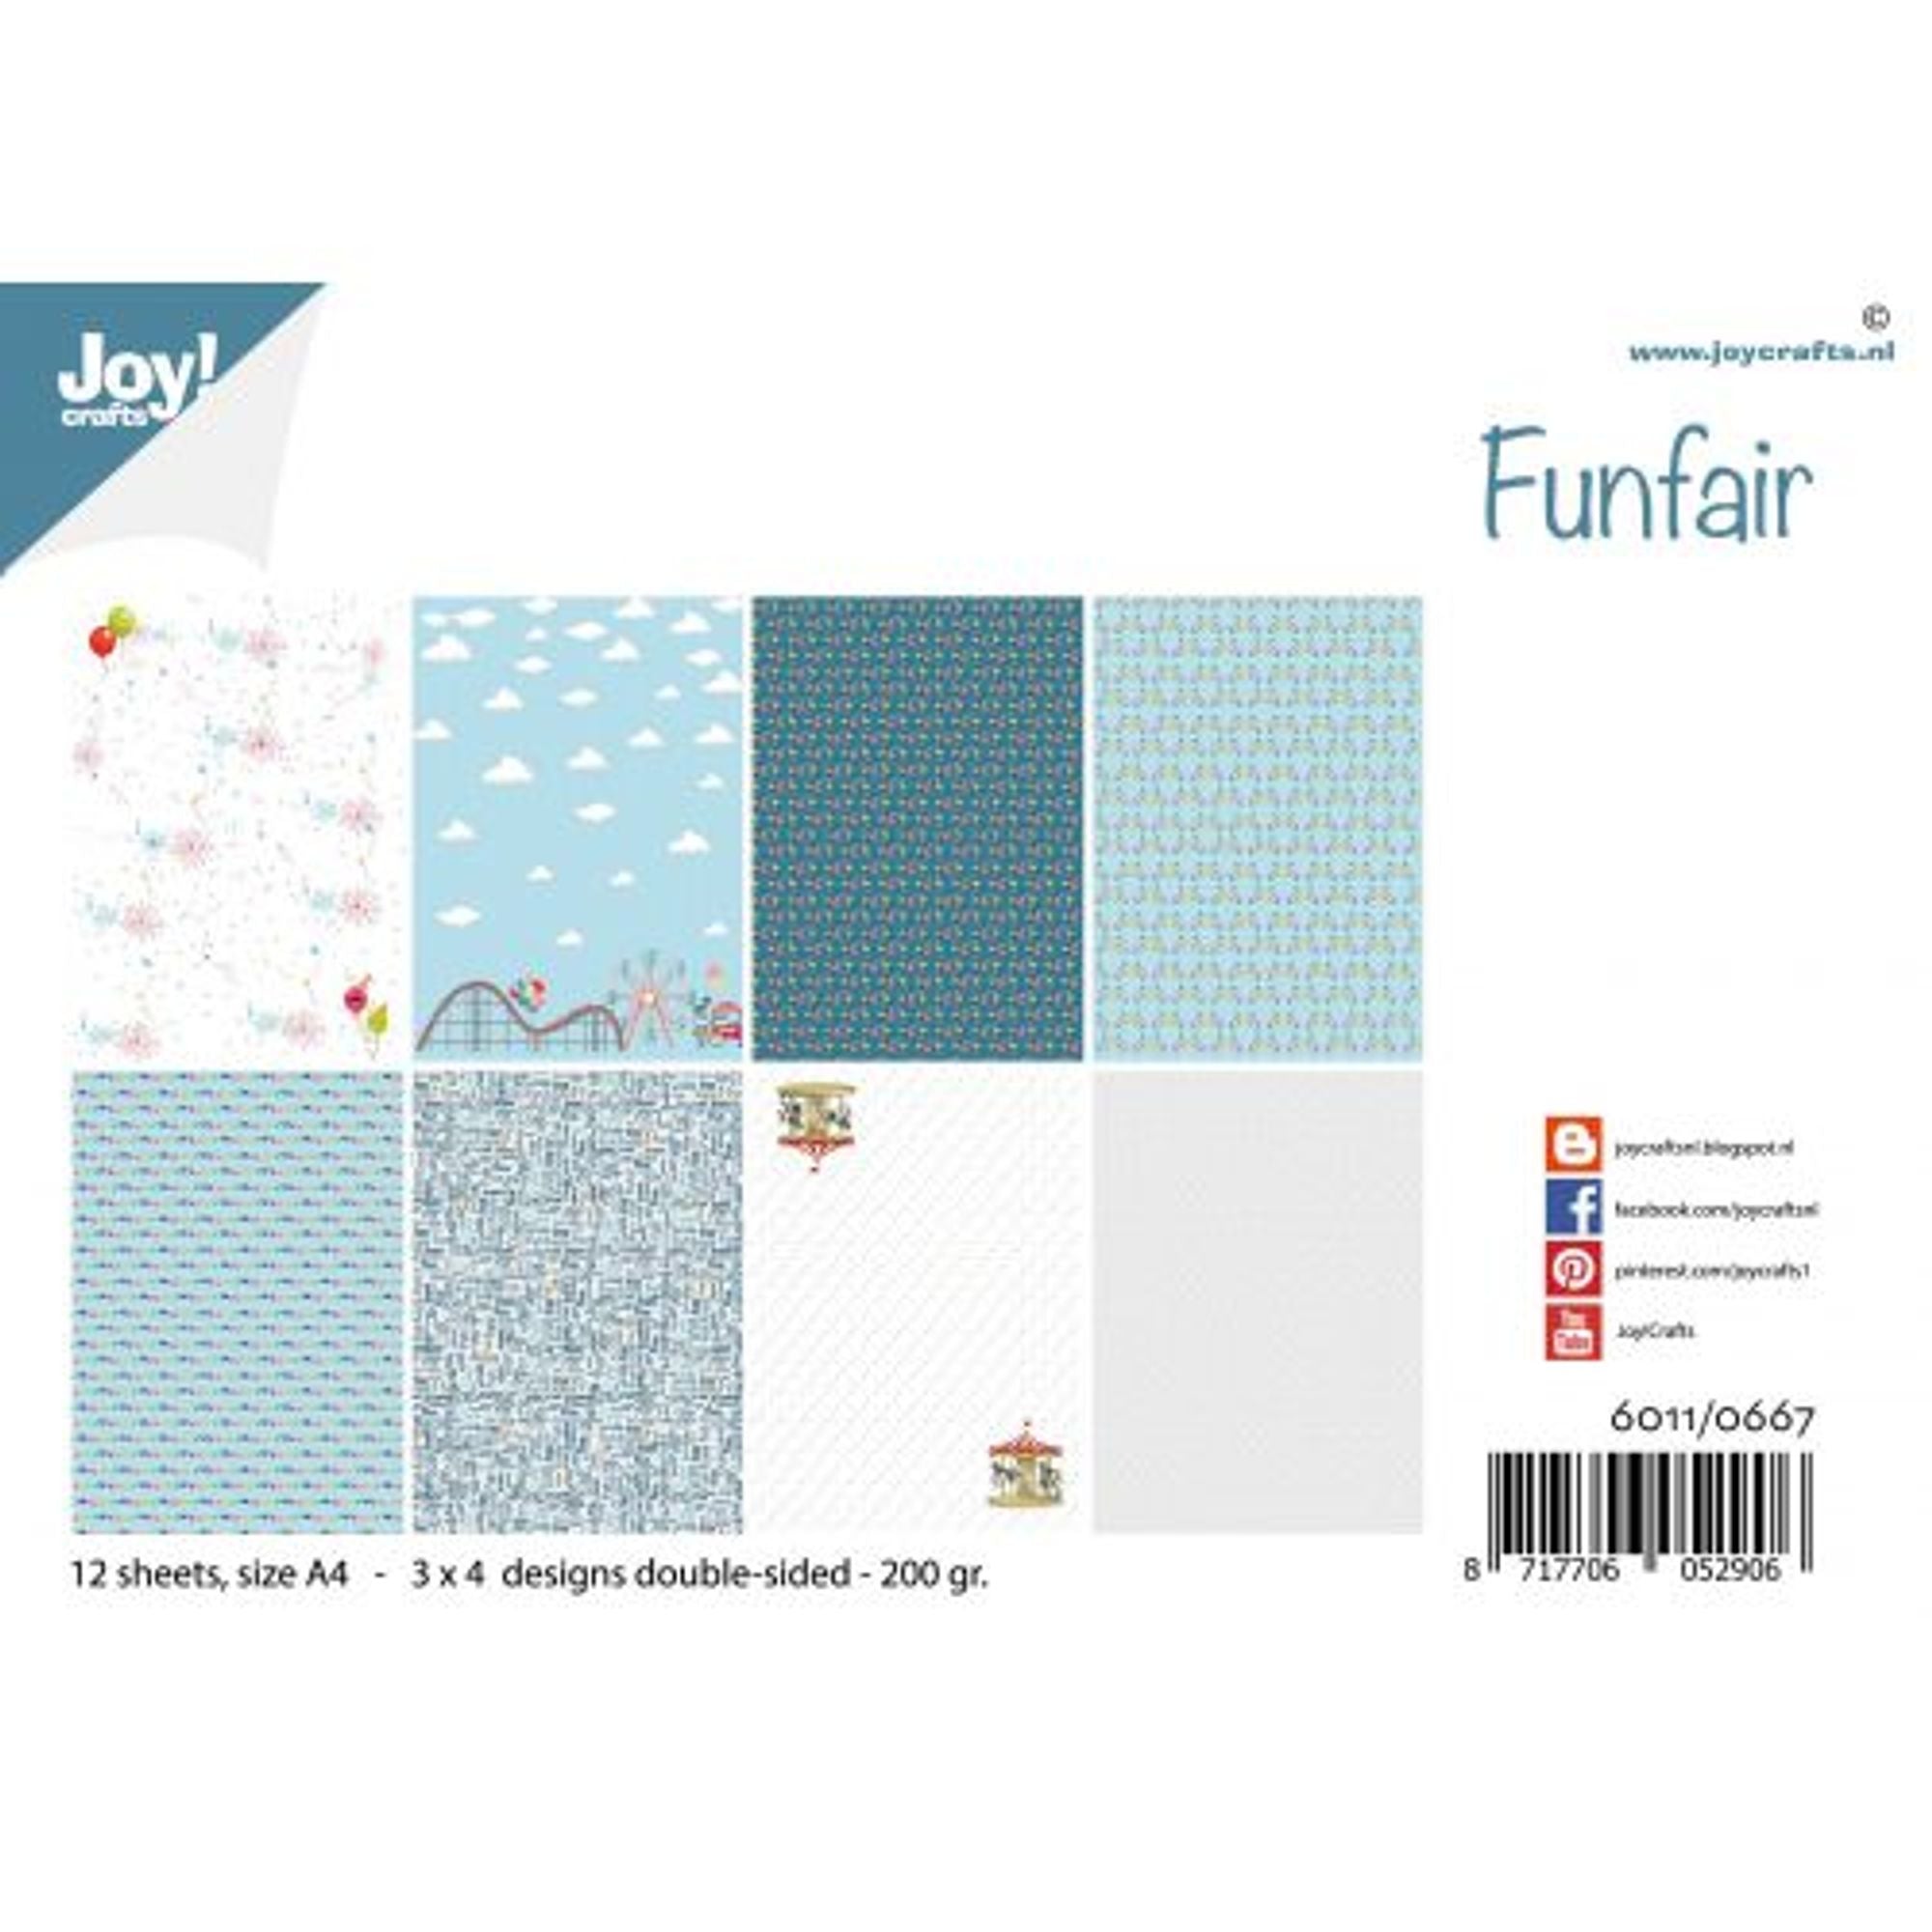 Joy! Crafts A4 Papers - Funfair